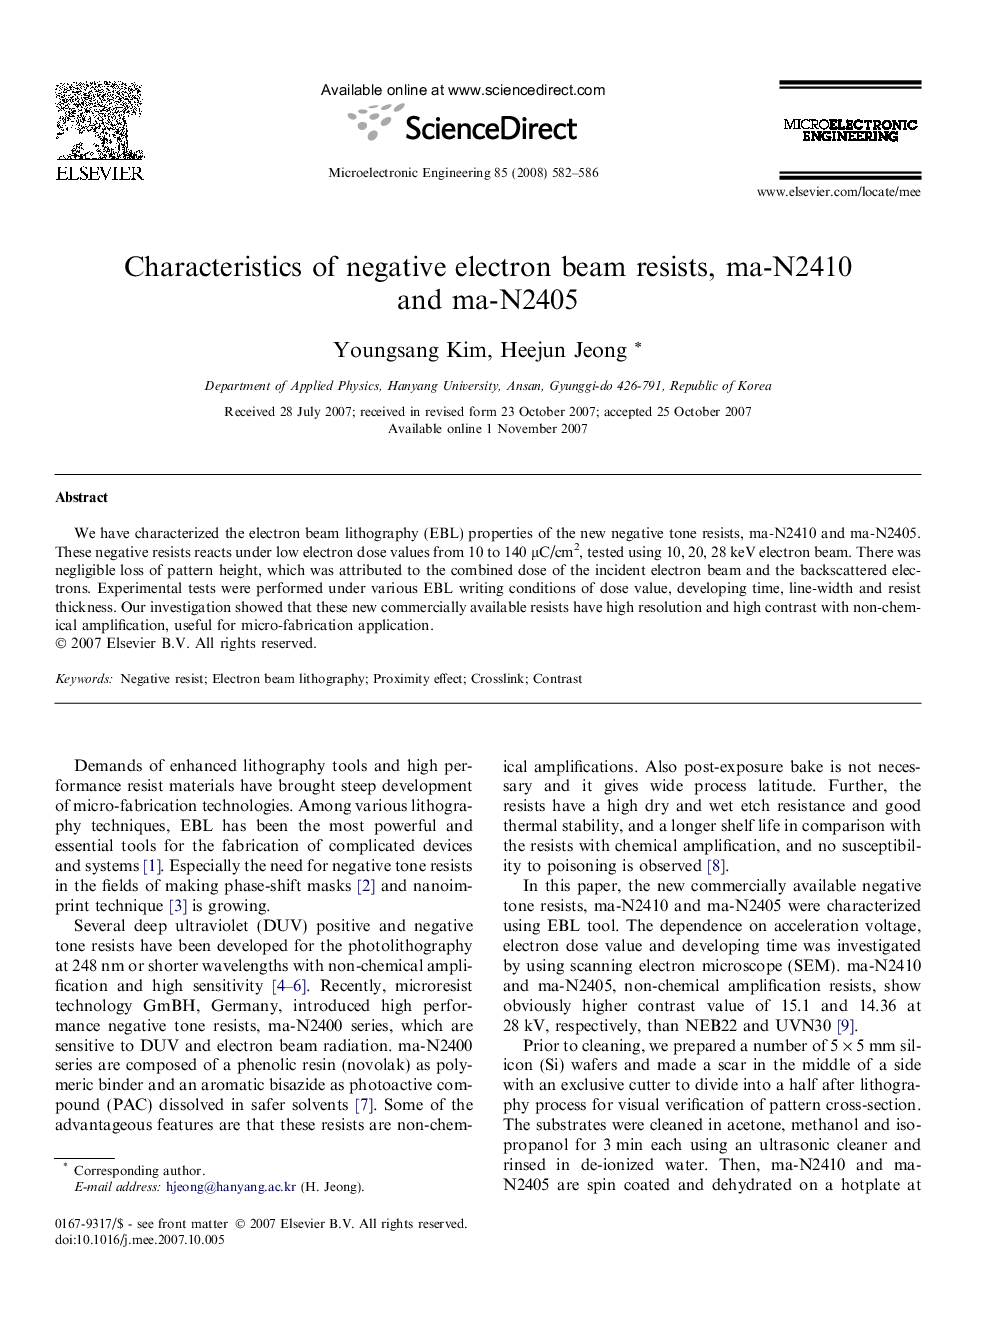 Characteristics of negative electron beam resists, ma-N2410 and ma-N2405